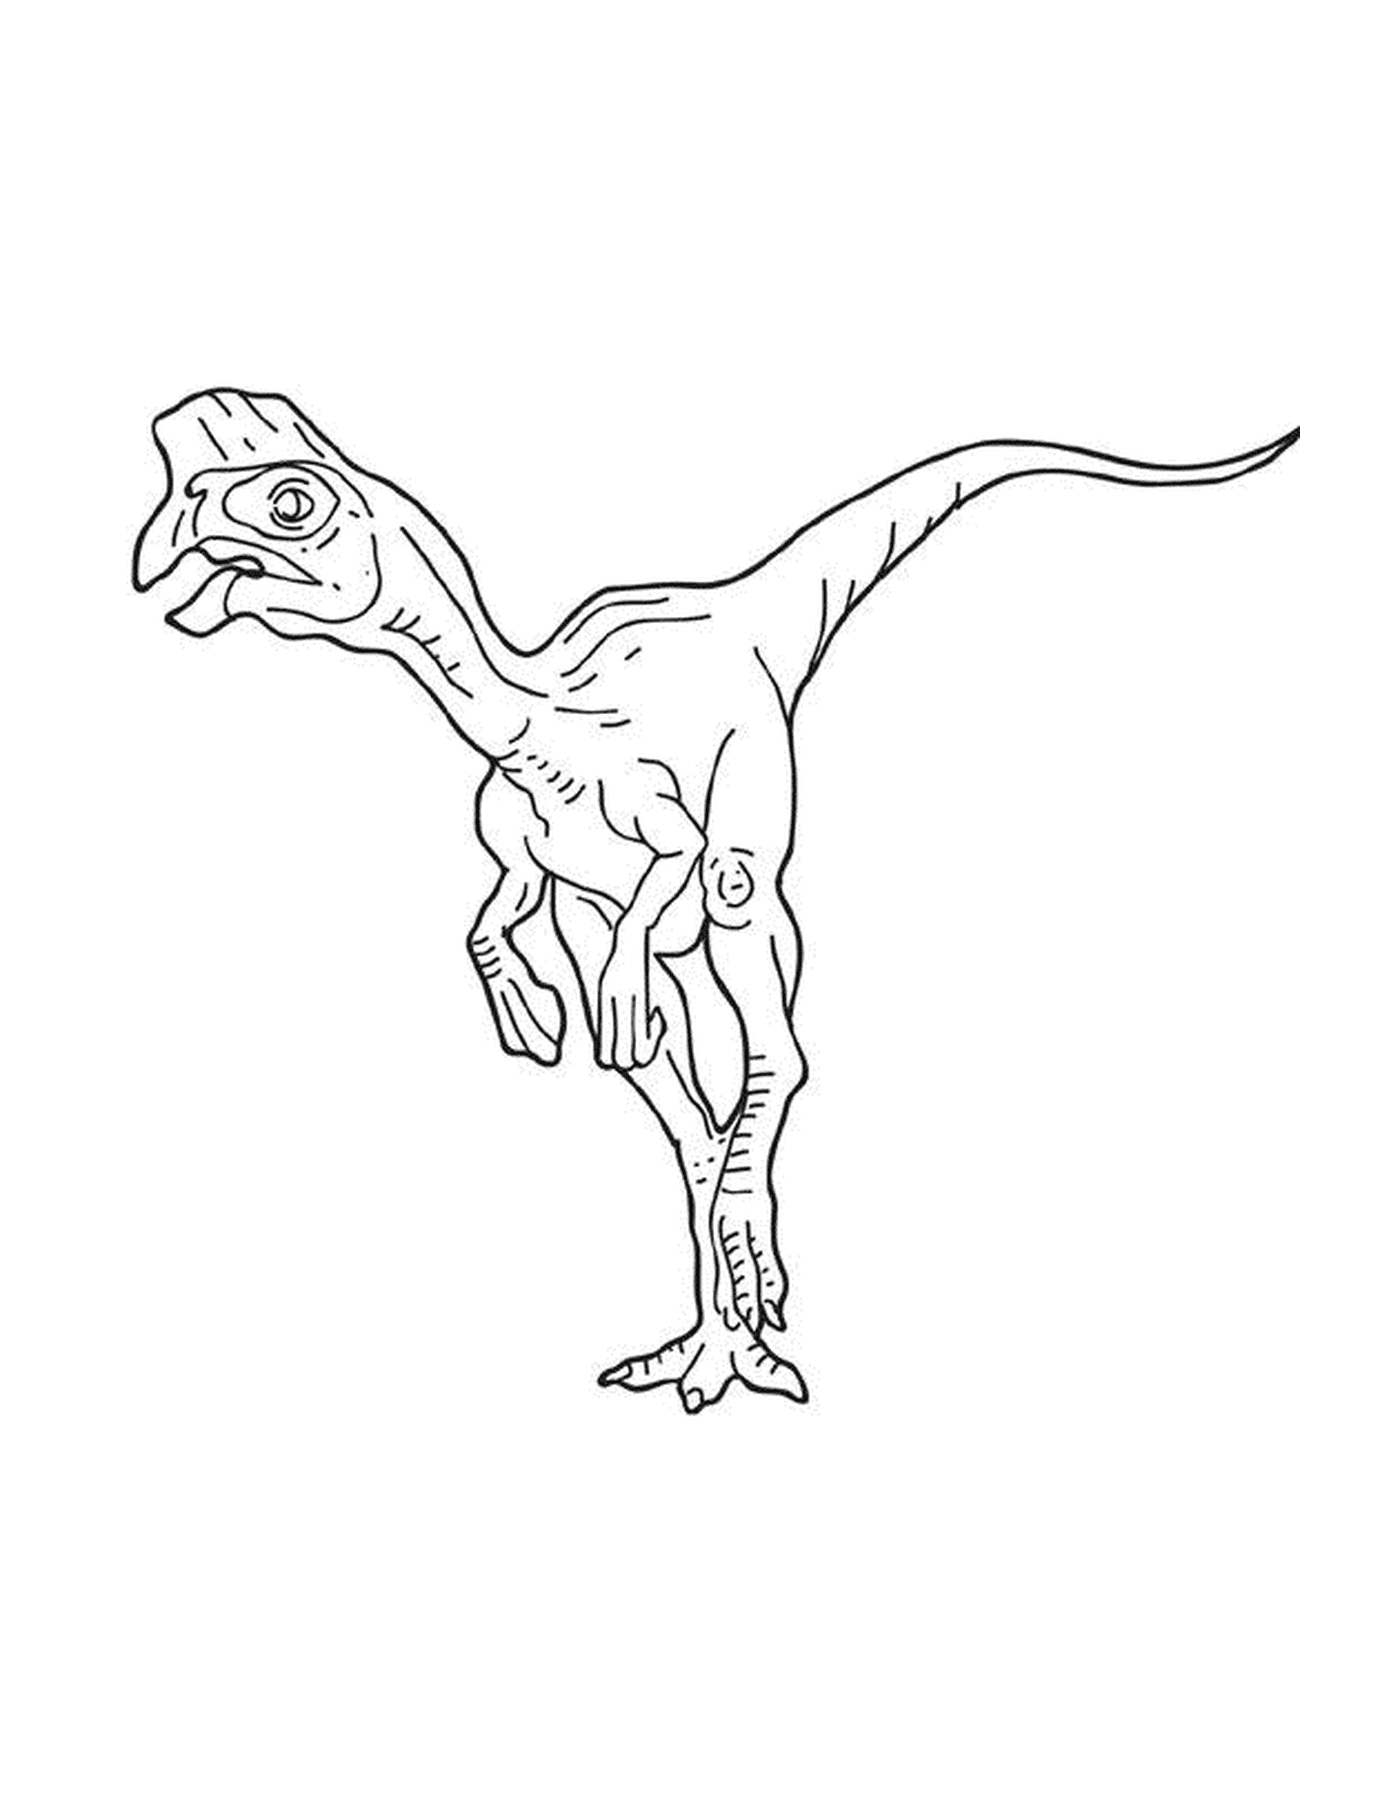  Стоящий овираптор динозавр 